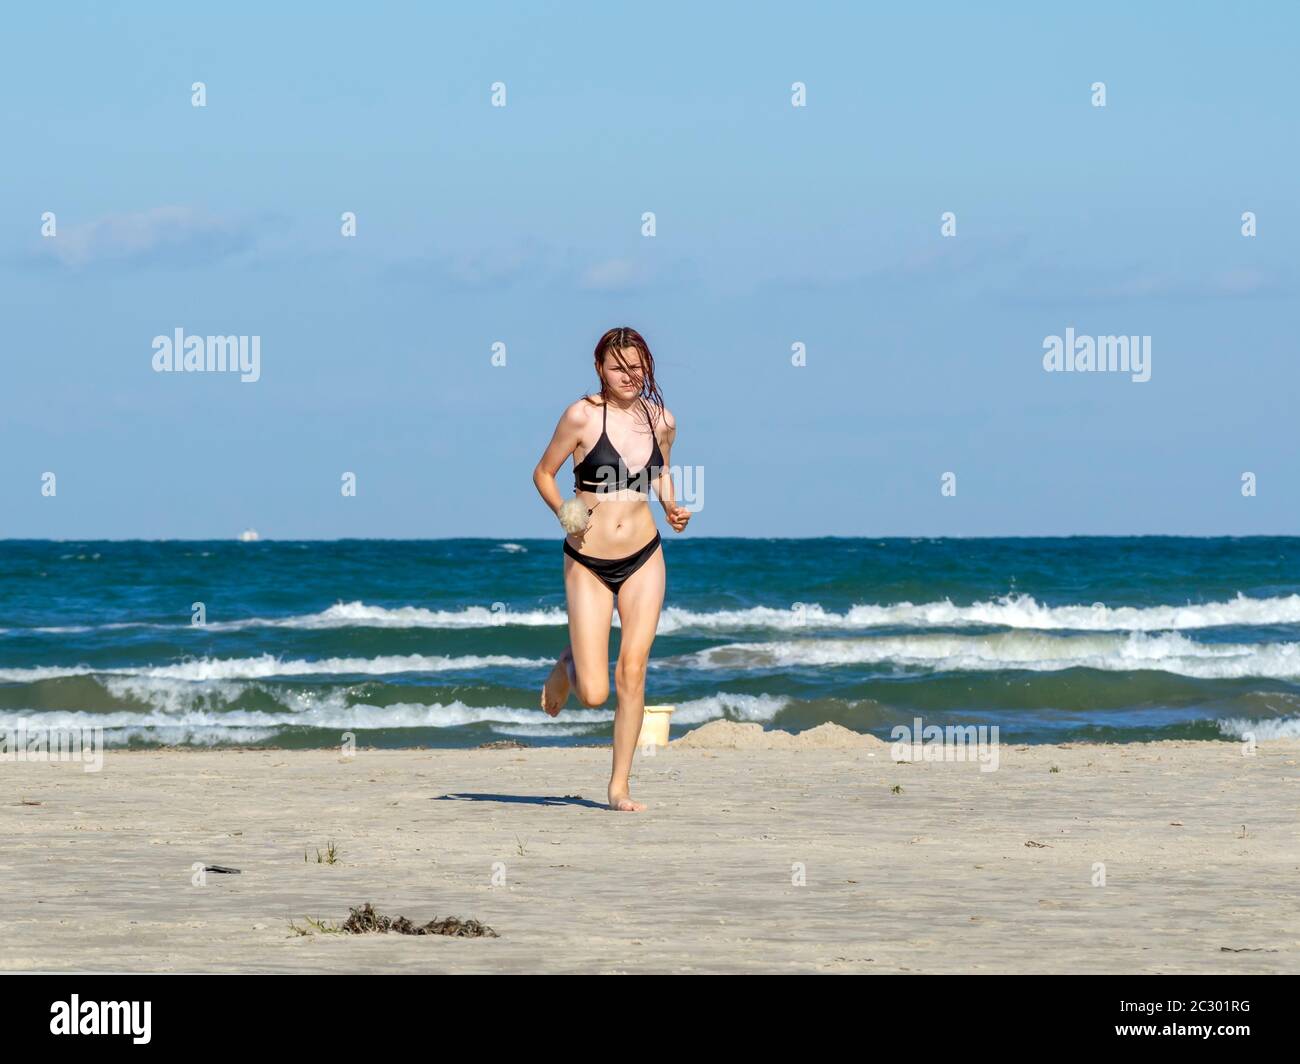 A young Caucasian girl in a black bikini bathing suit runs on the beach in Port Aransas, Texas USA. Stock Photo